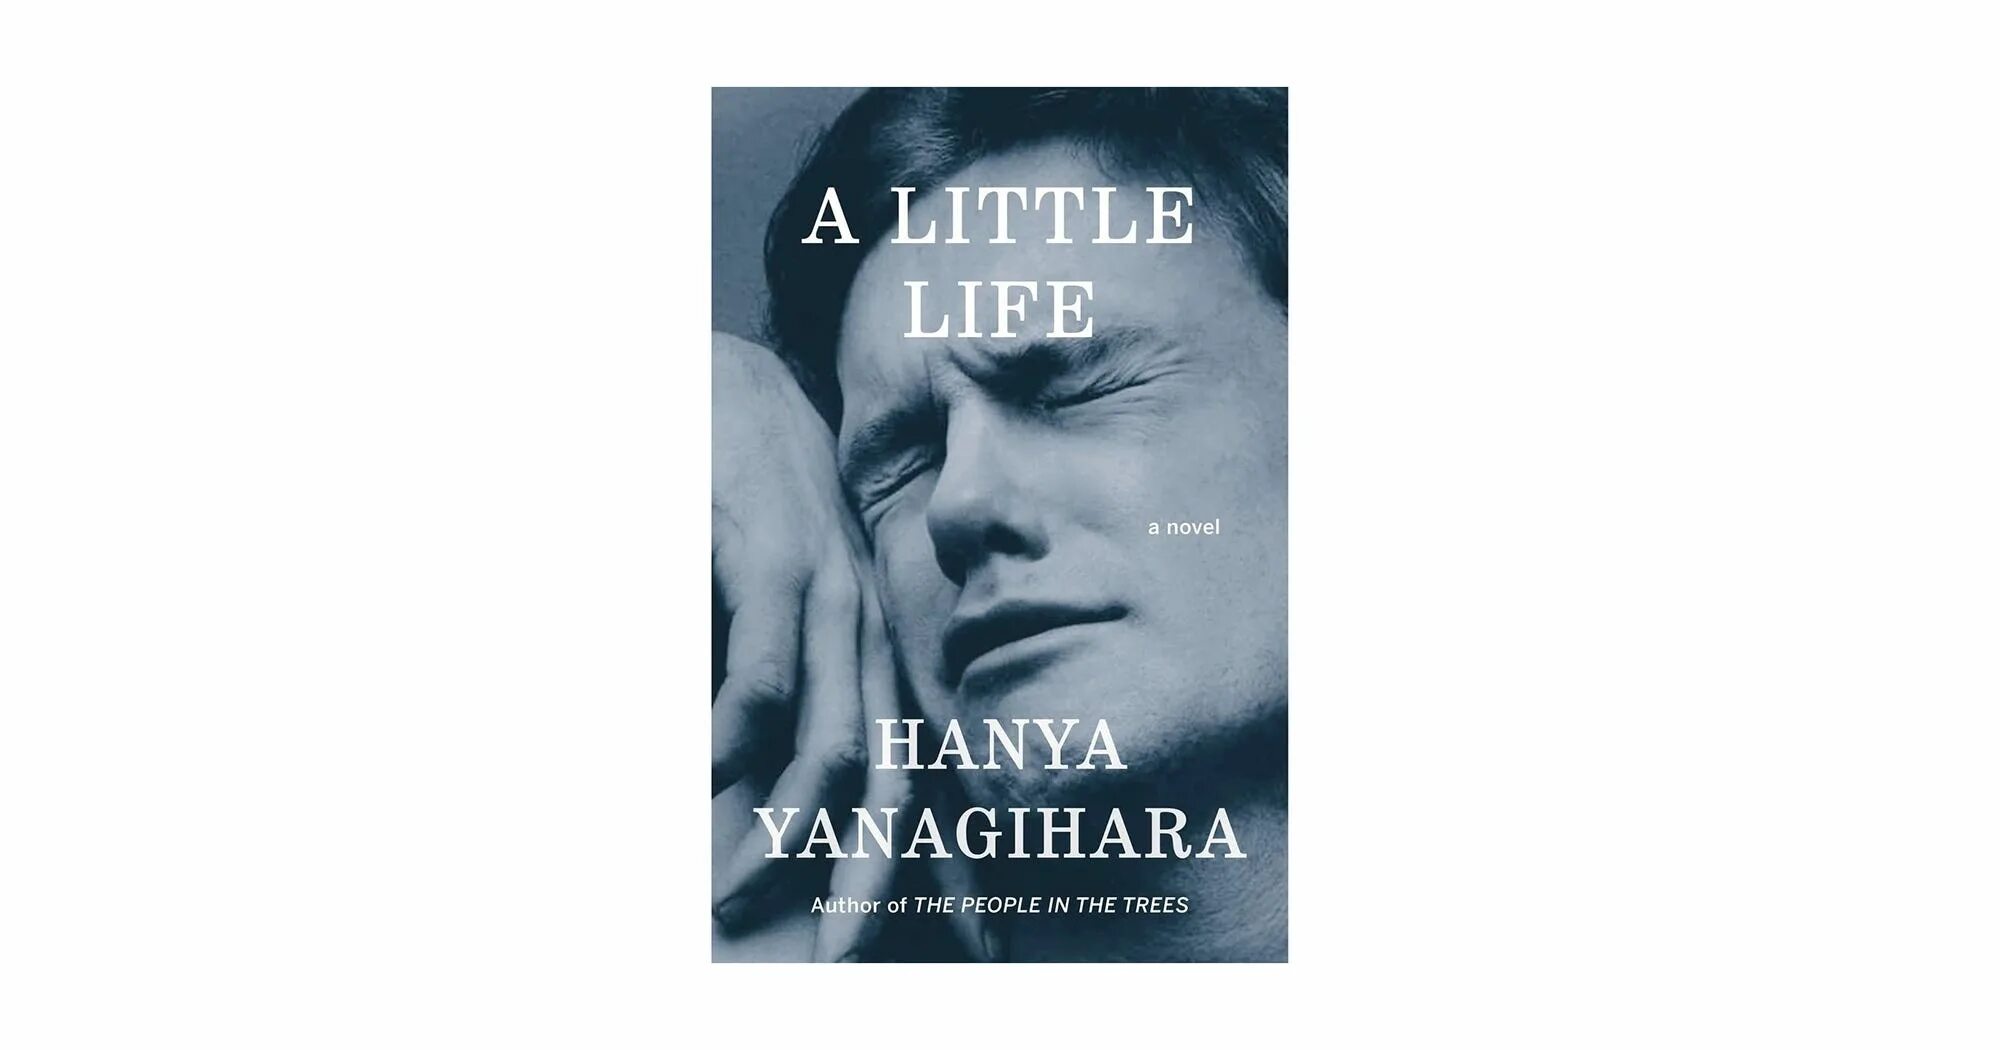 A little Life книга. A little Life hanya Yanagihara. The little Life hanya Yanagihara обложка. Обложка книги a little Life. Little life book